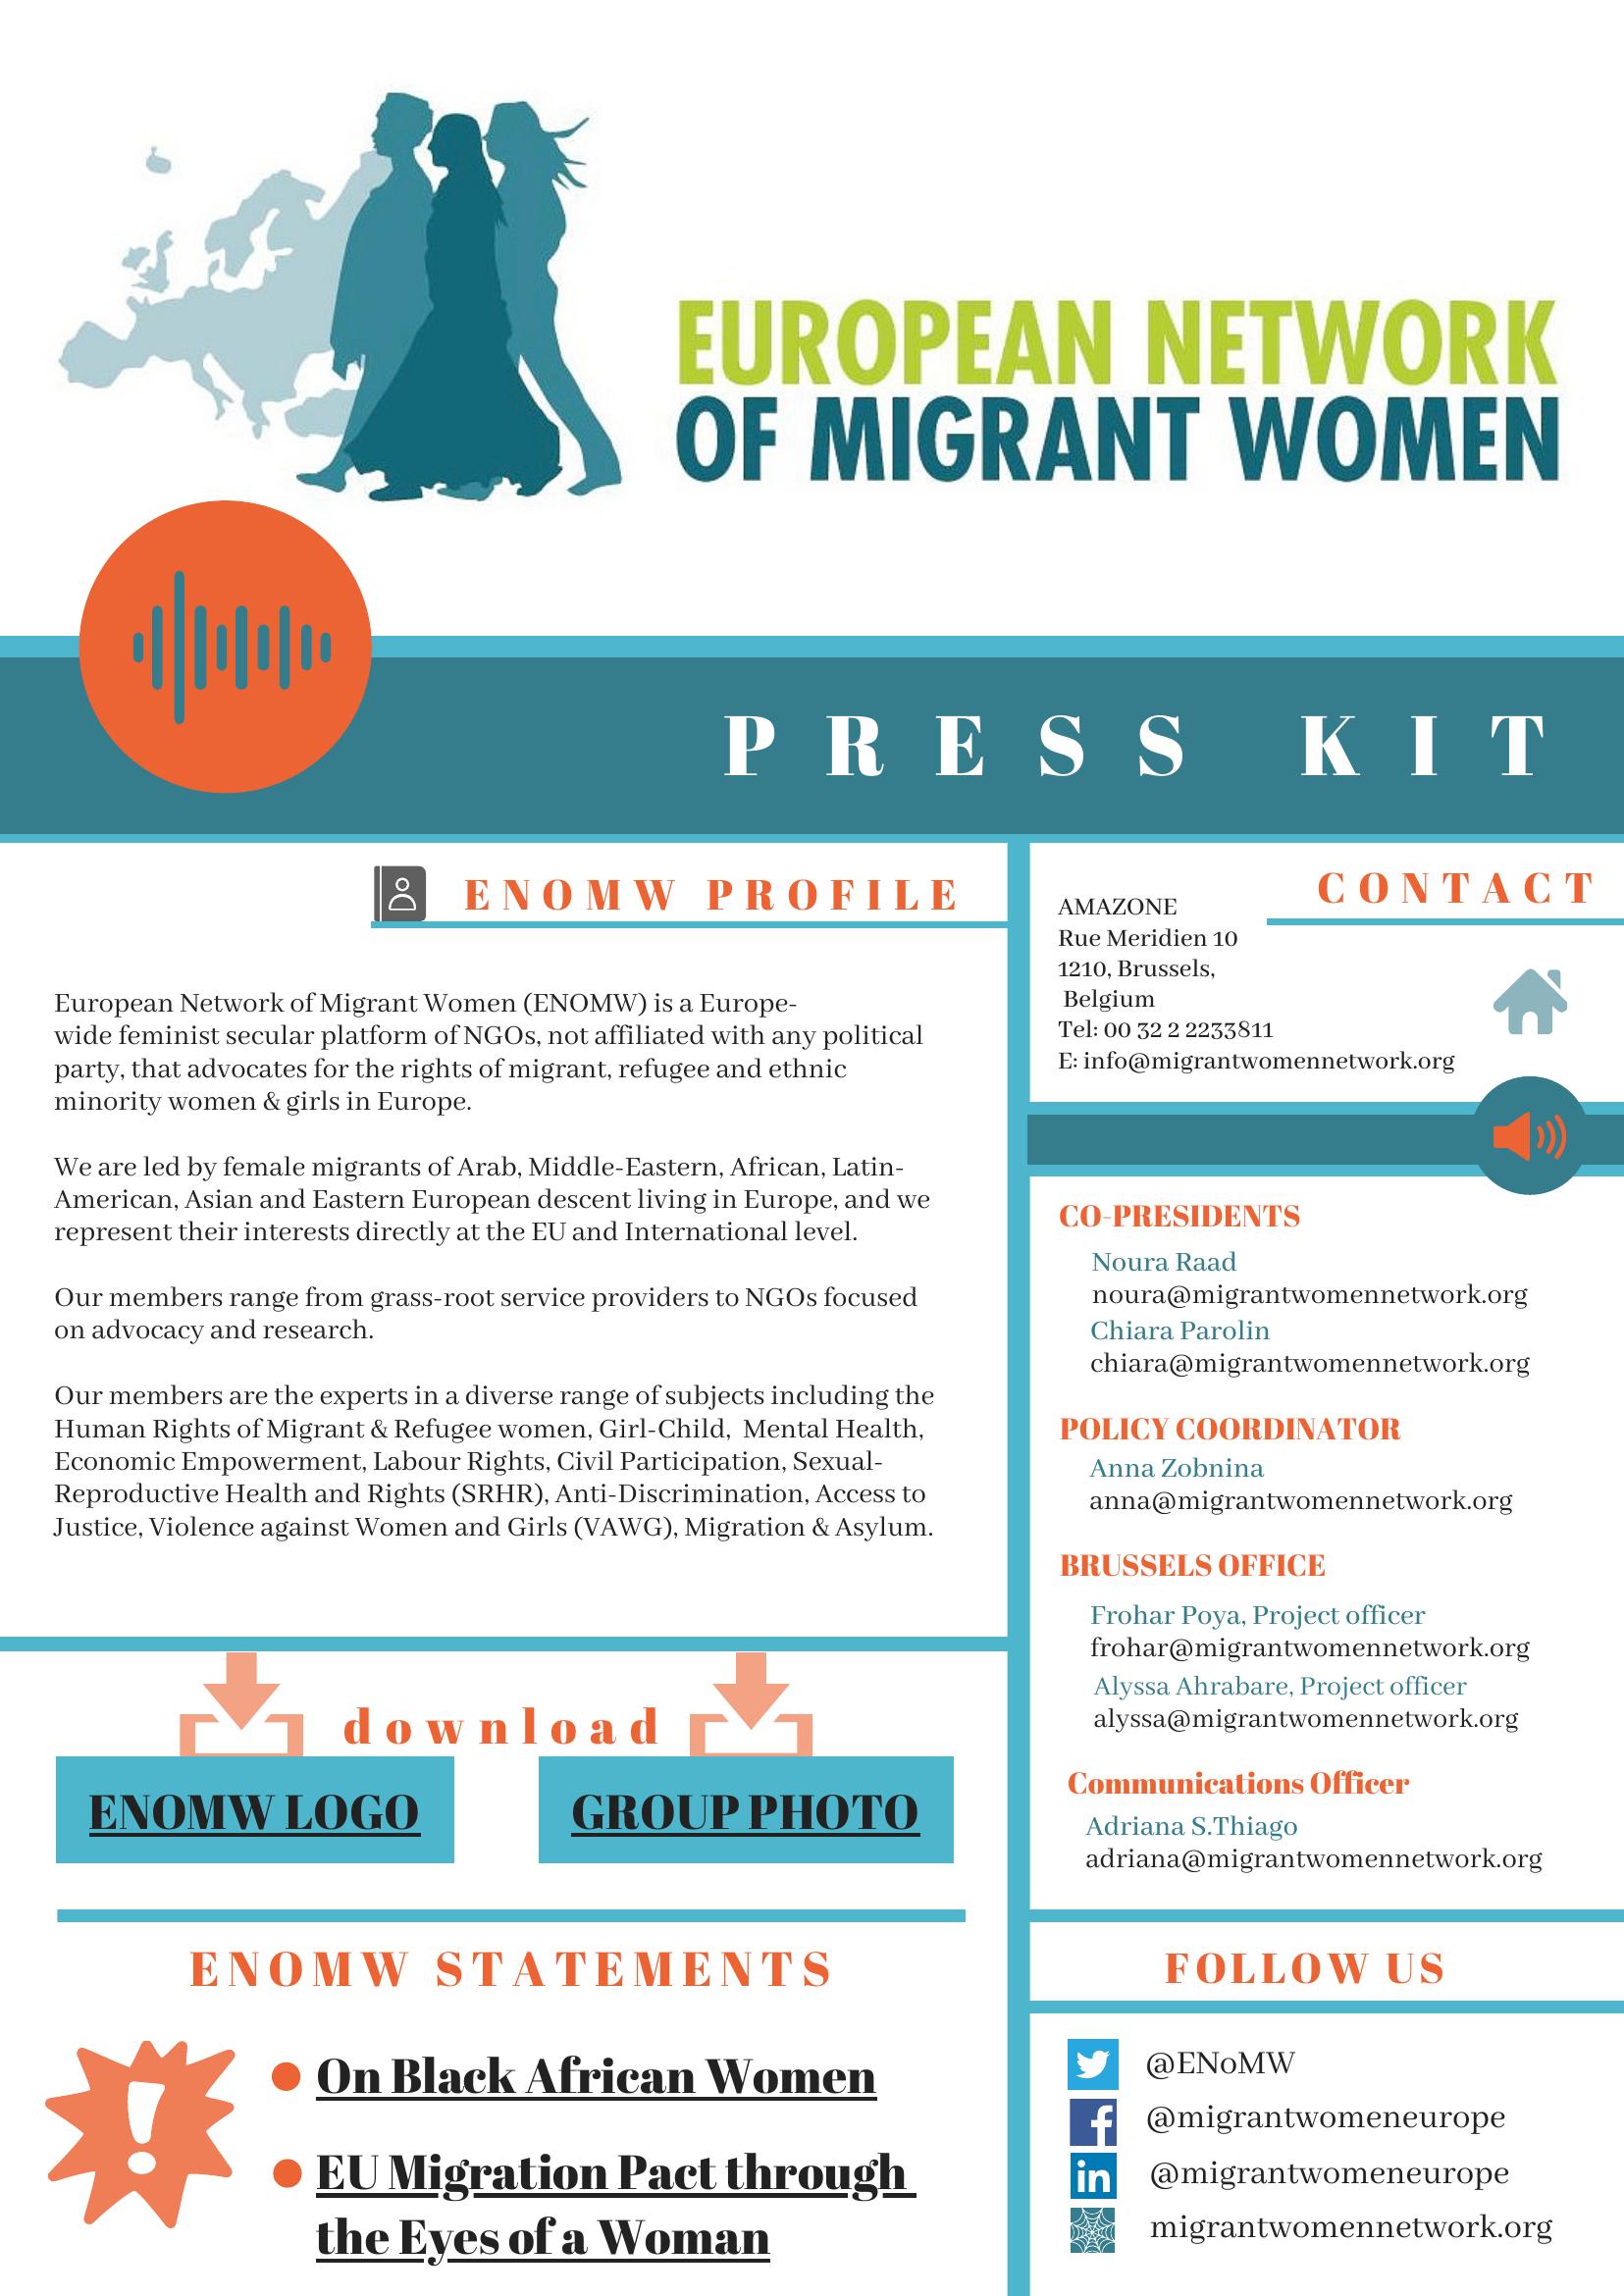 European Network of Migrant Women Press Kit